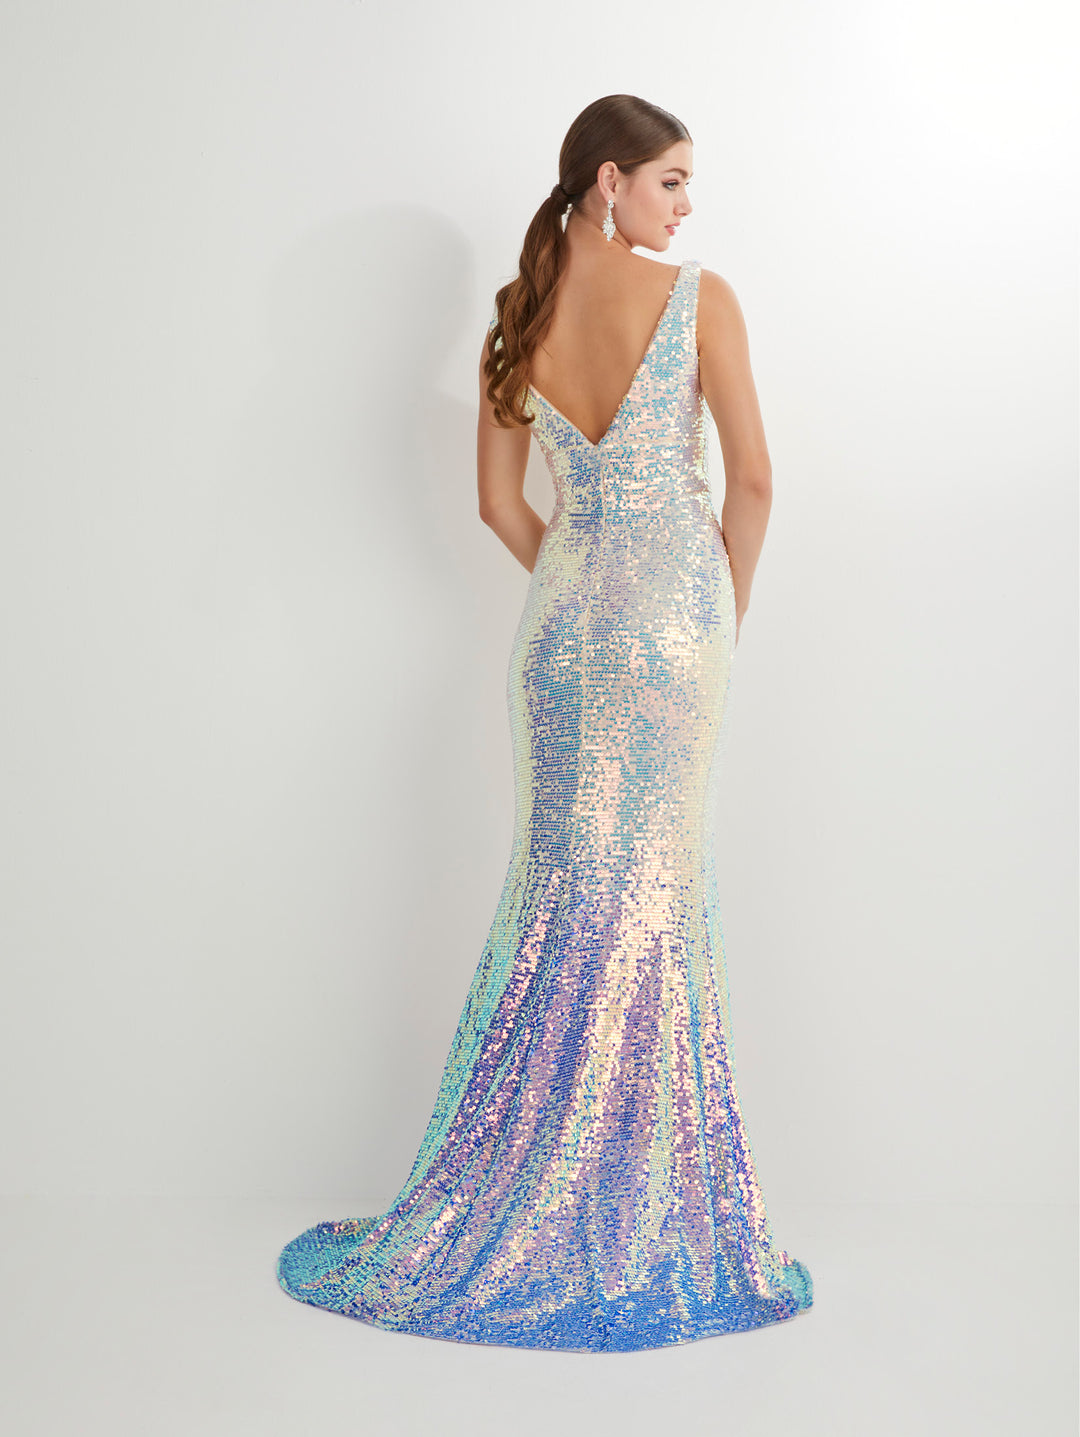 Ombre Sequin Sleeveless Mermaid Dress by Studio 17 12885